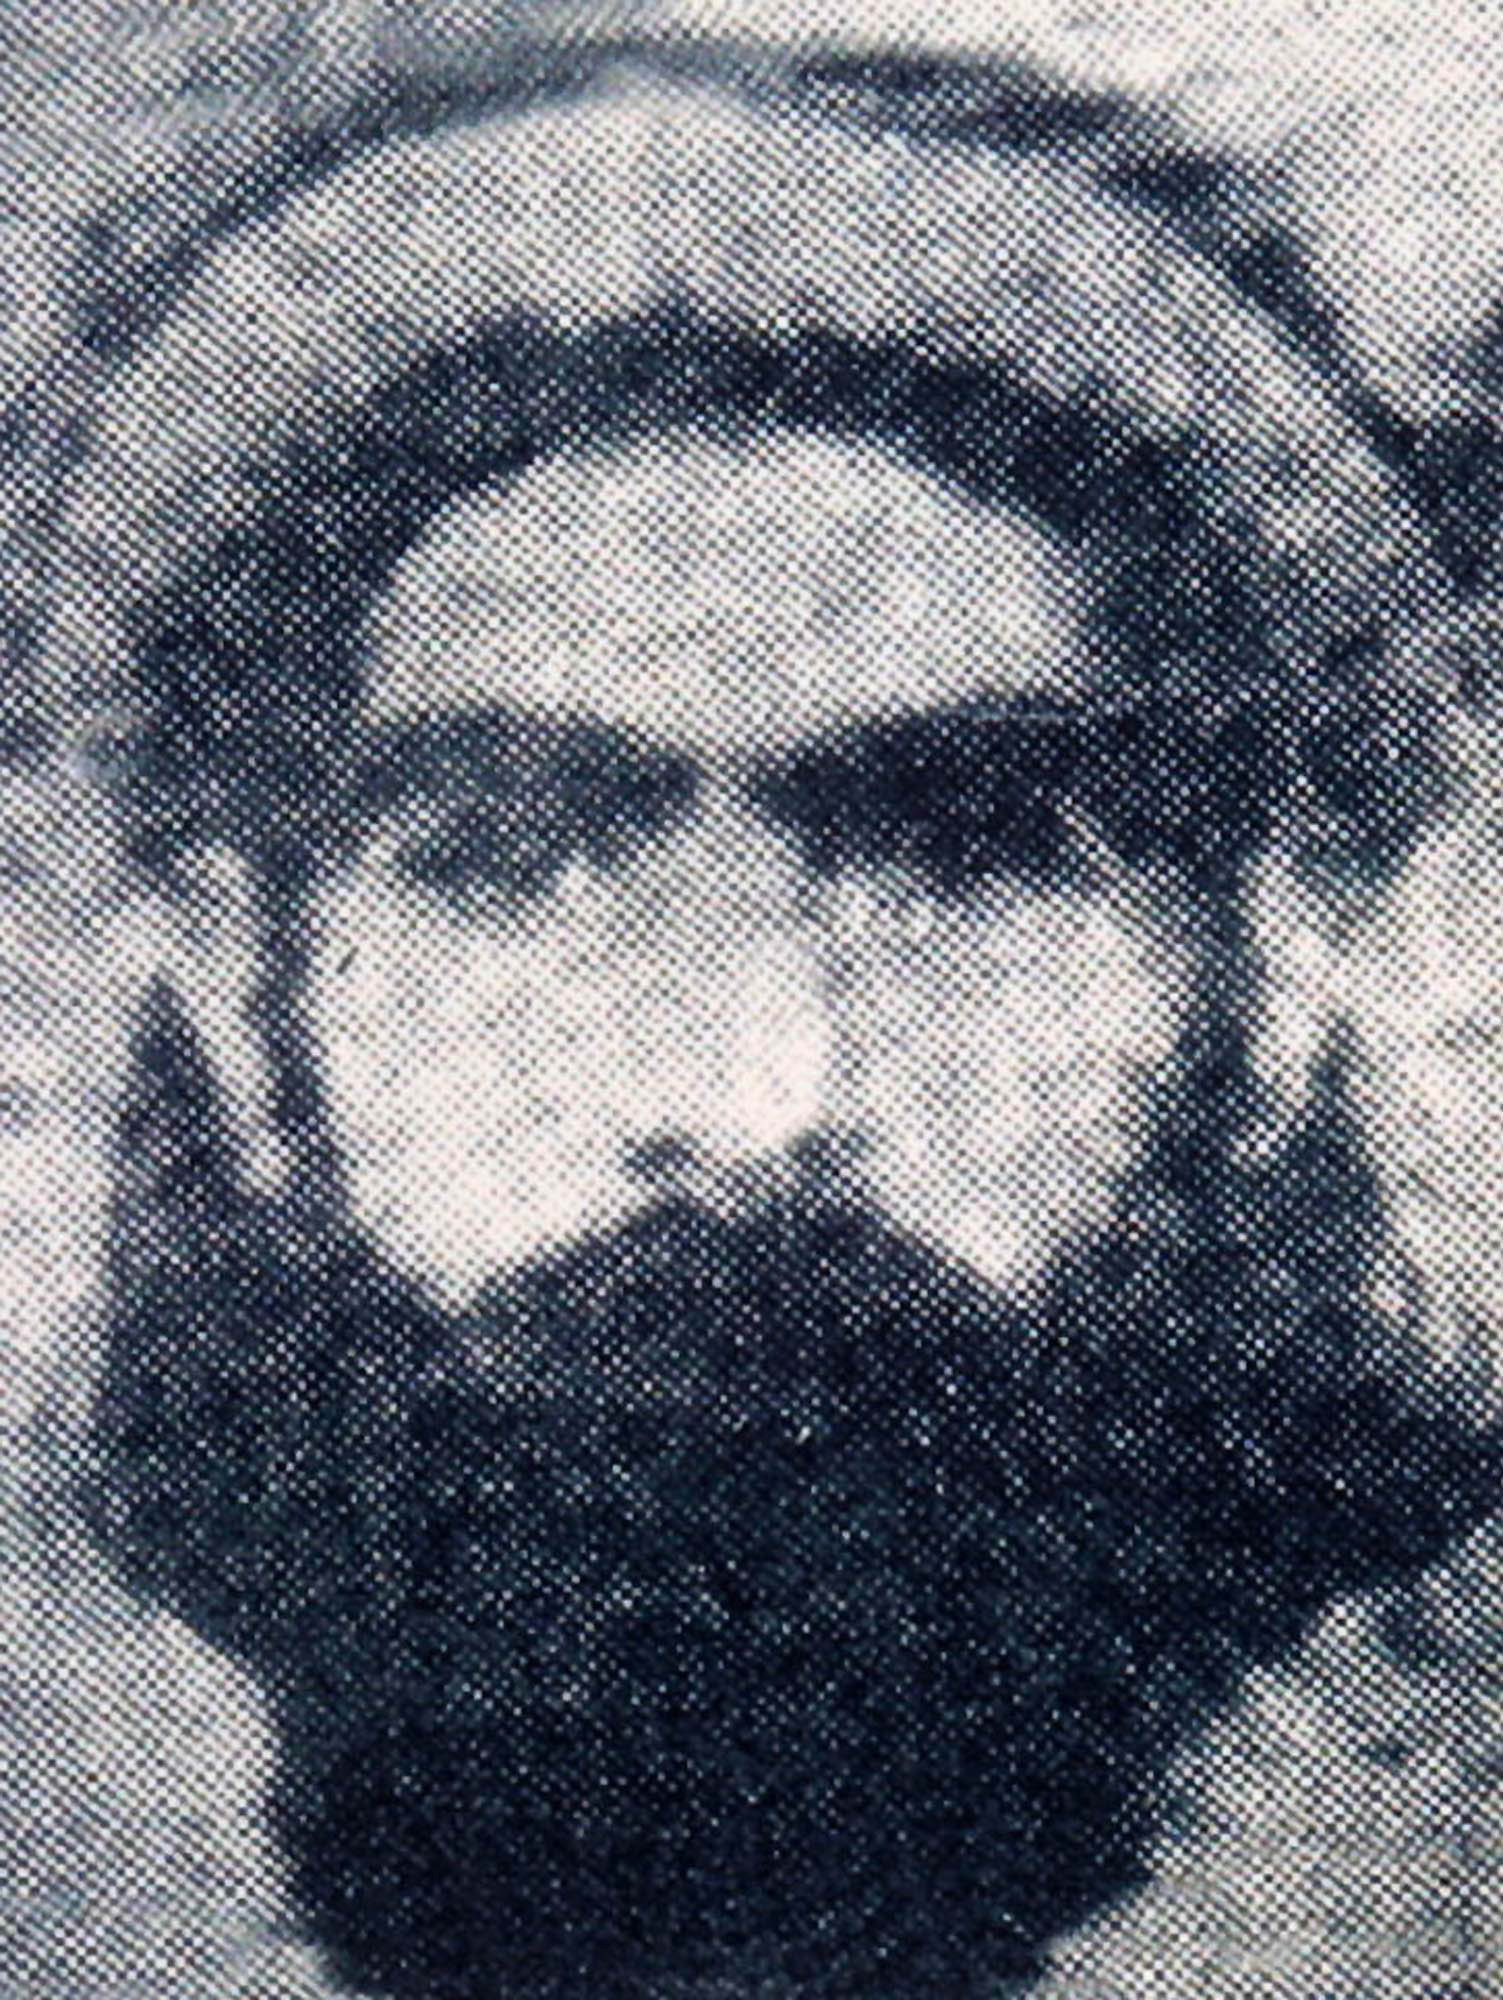 Terrorists Mullah Omar